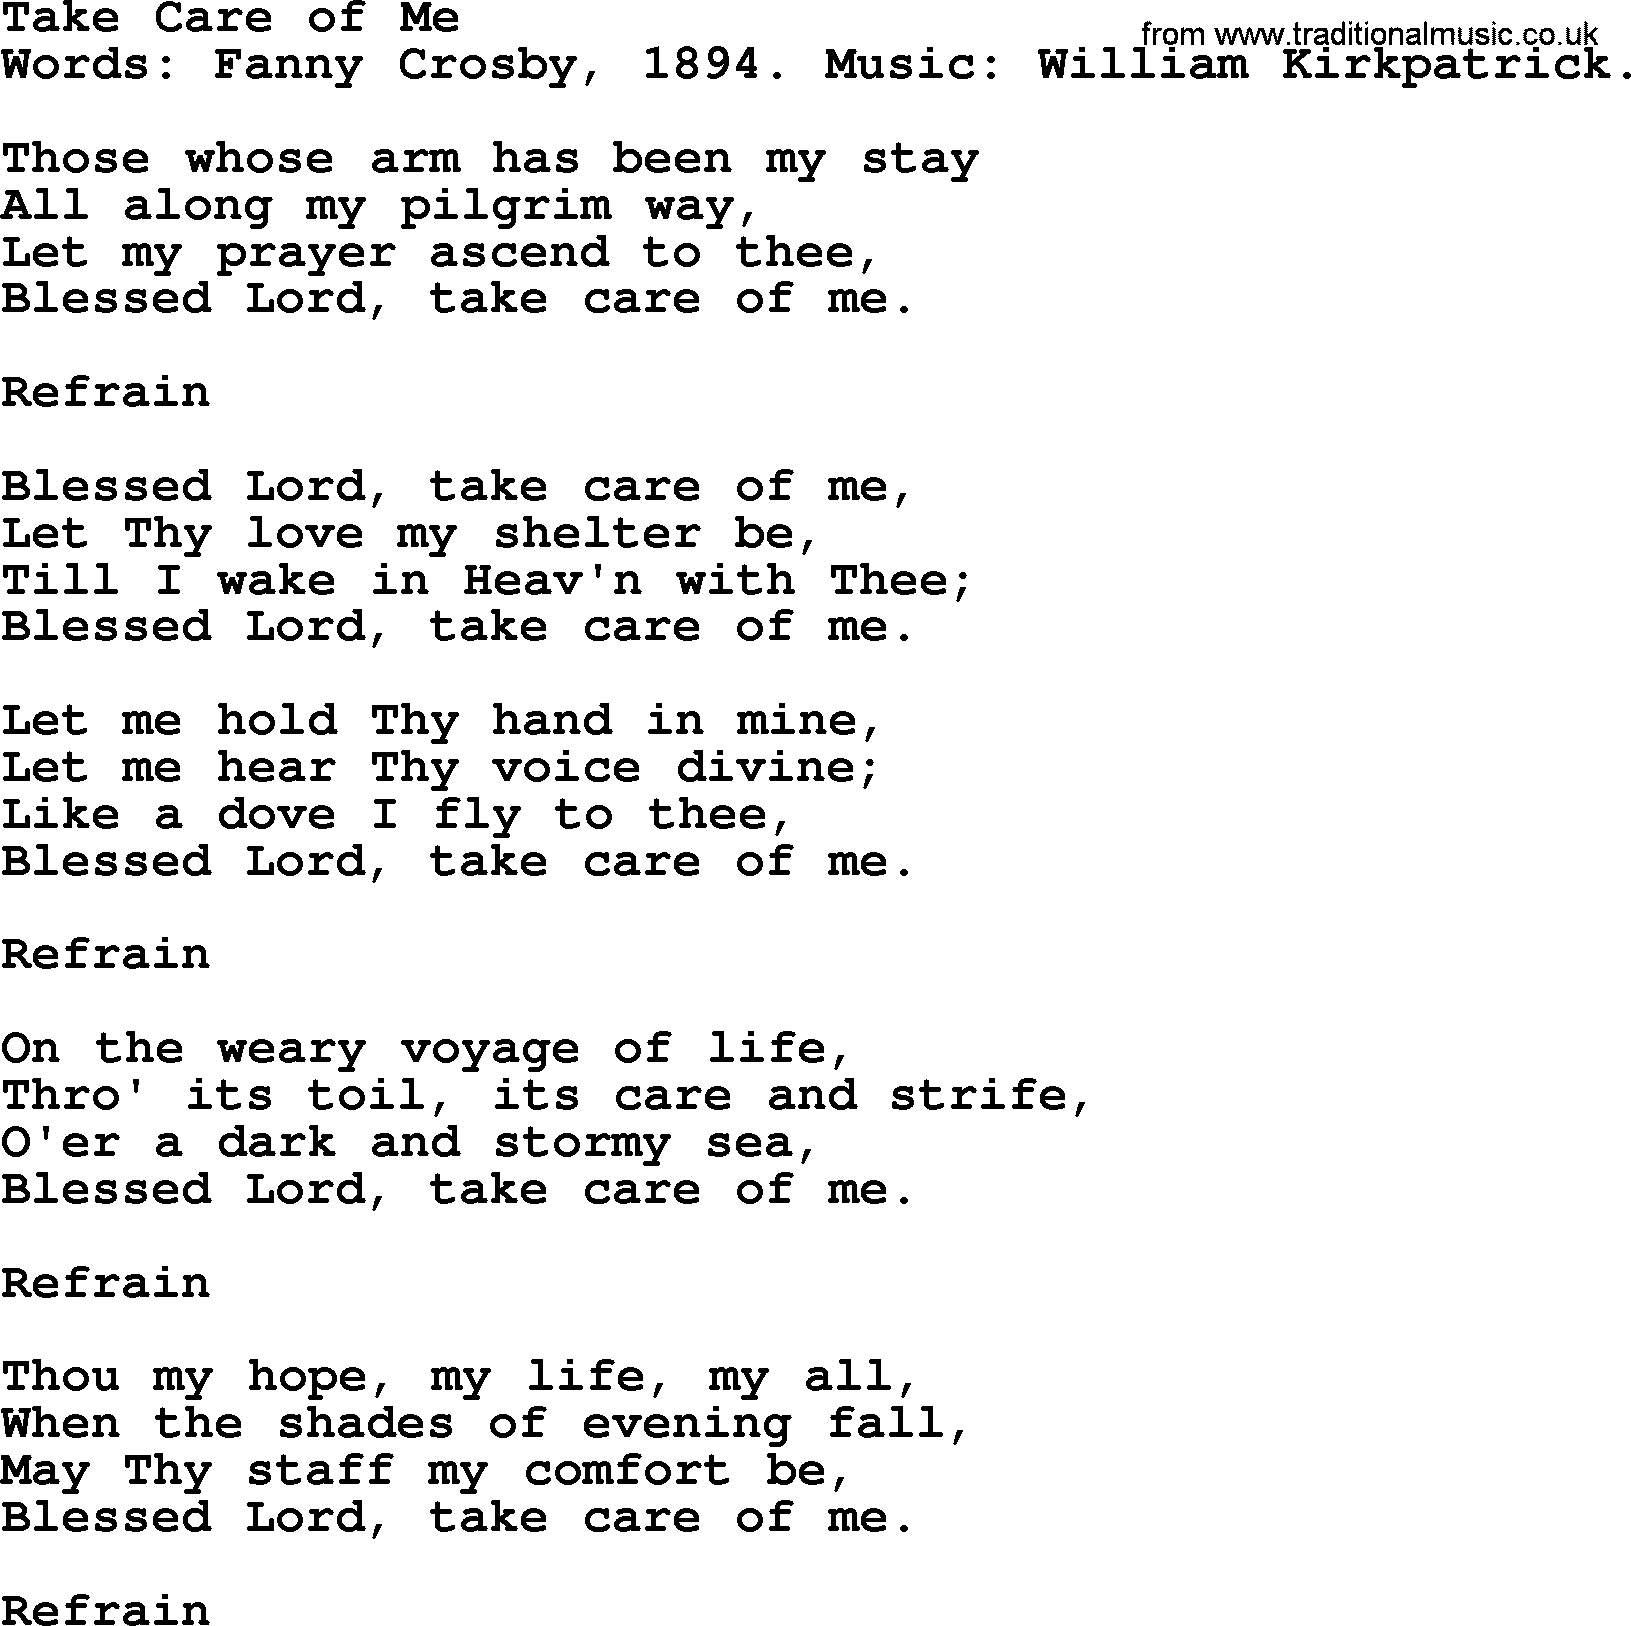 Fanny Crosby song: Take Care Of Me, lyrics